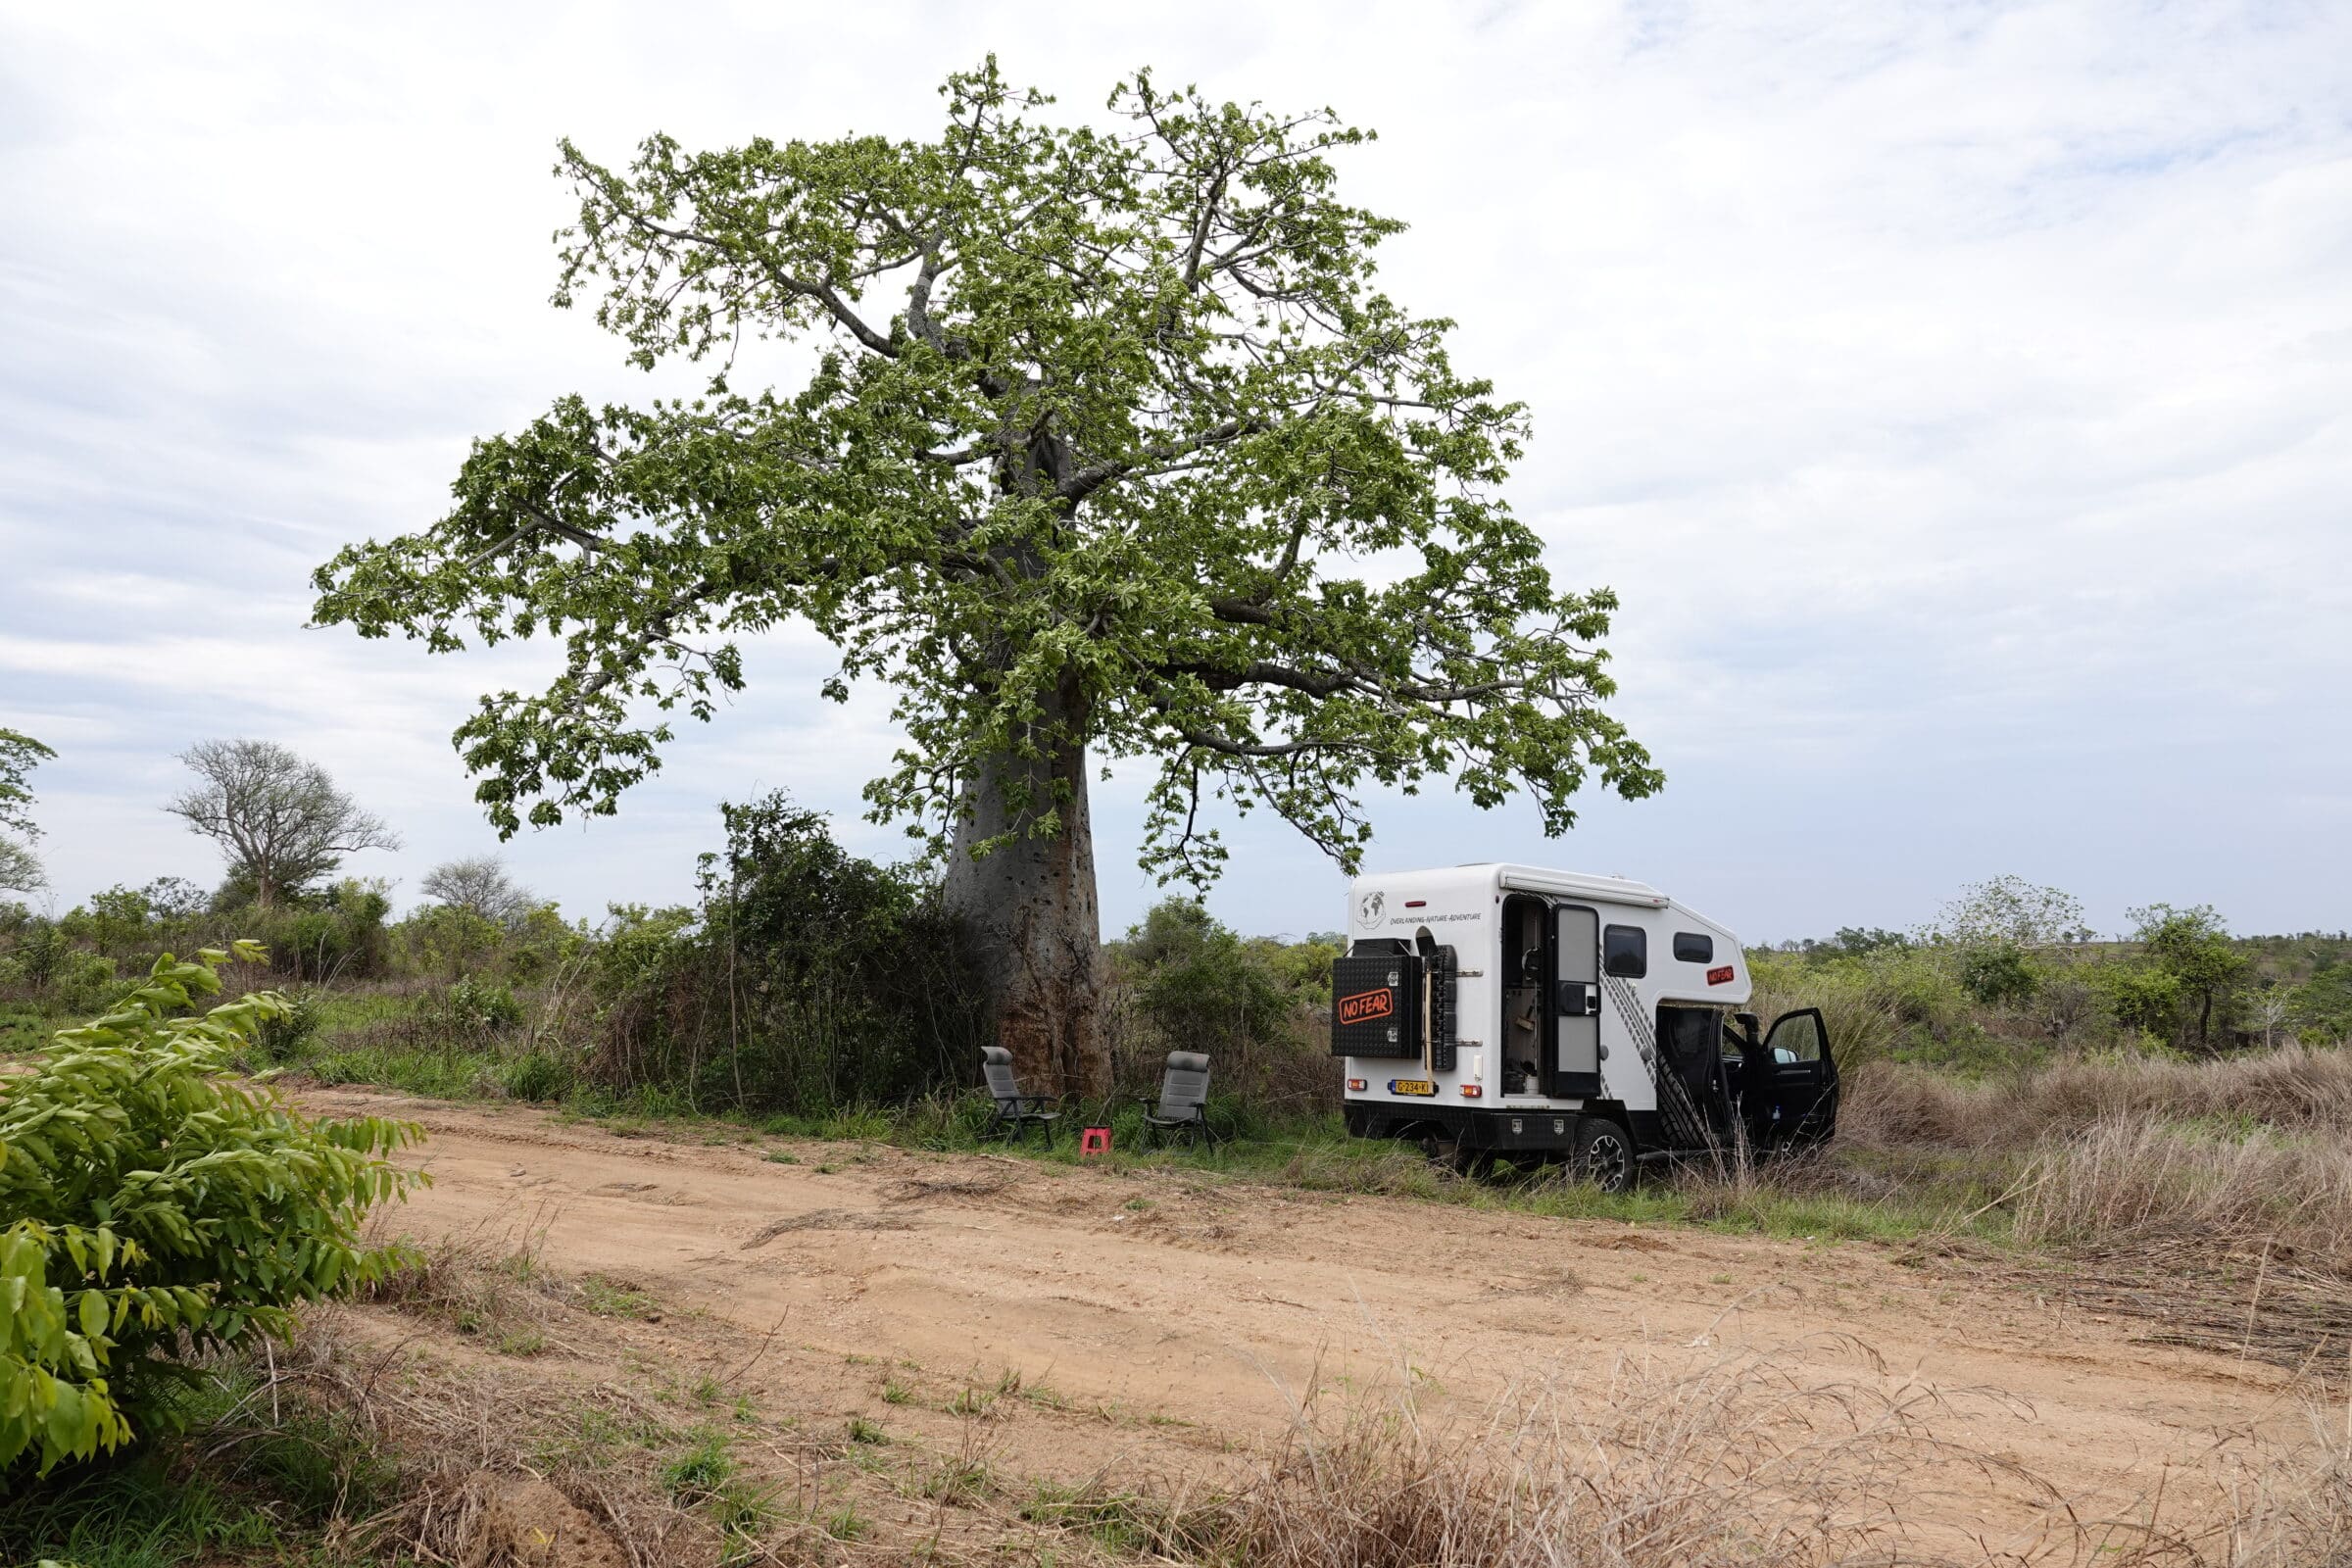 Kava ispod stabla baobaba | Prekrcavanje u Angoli